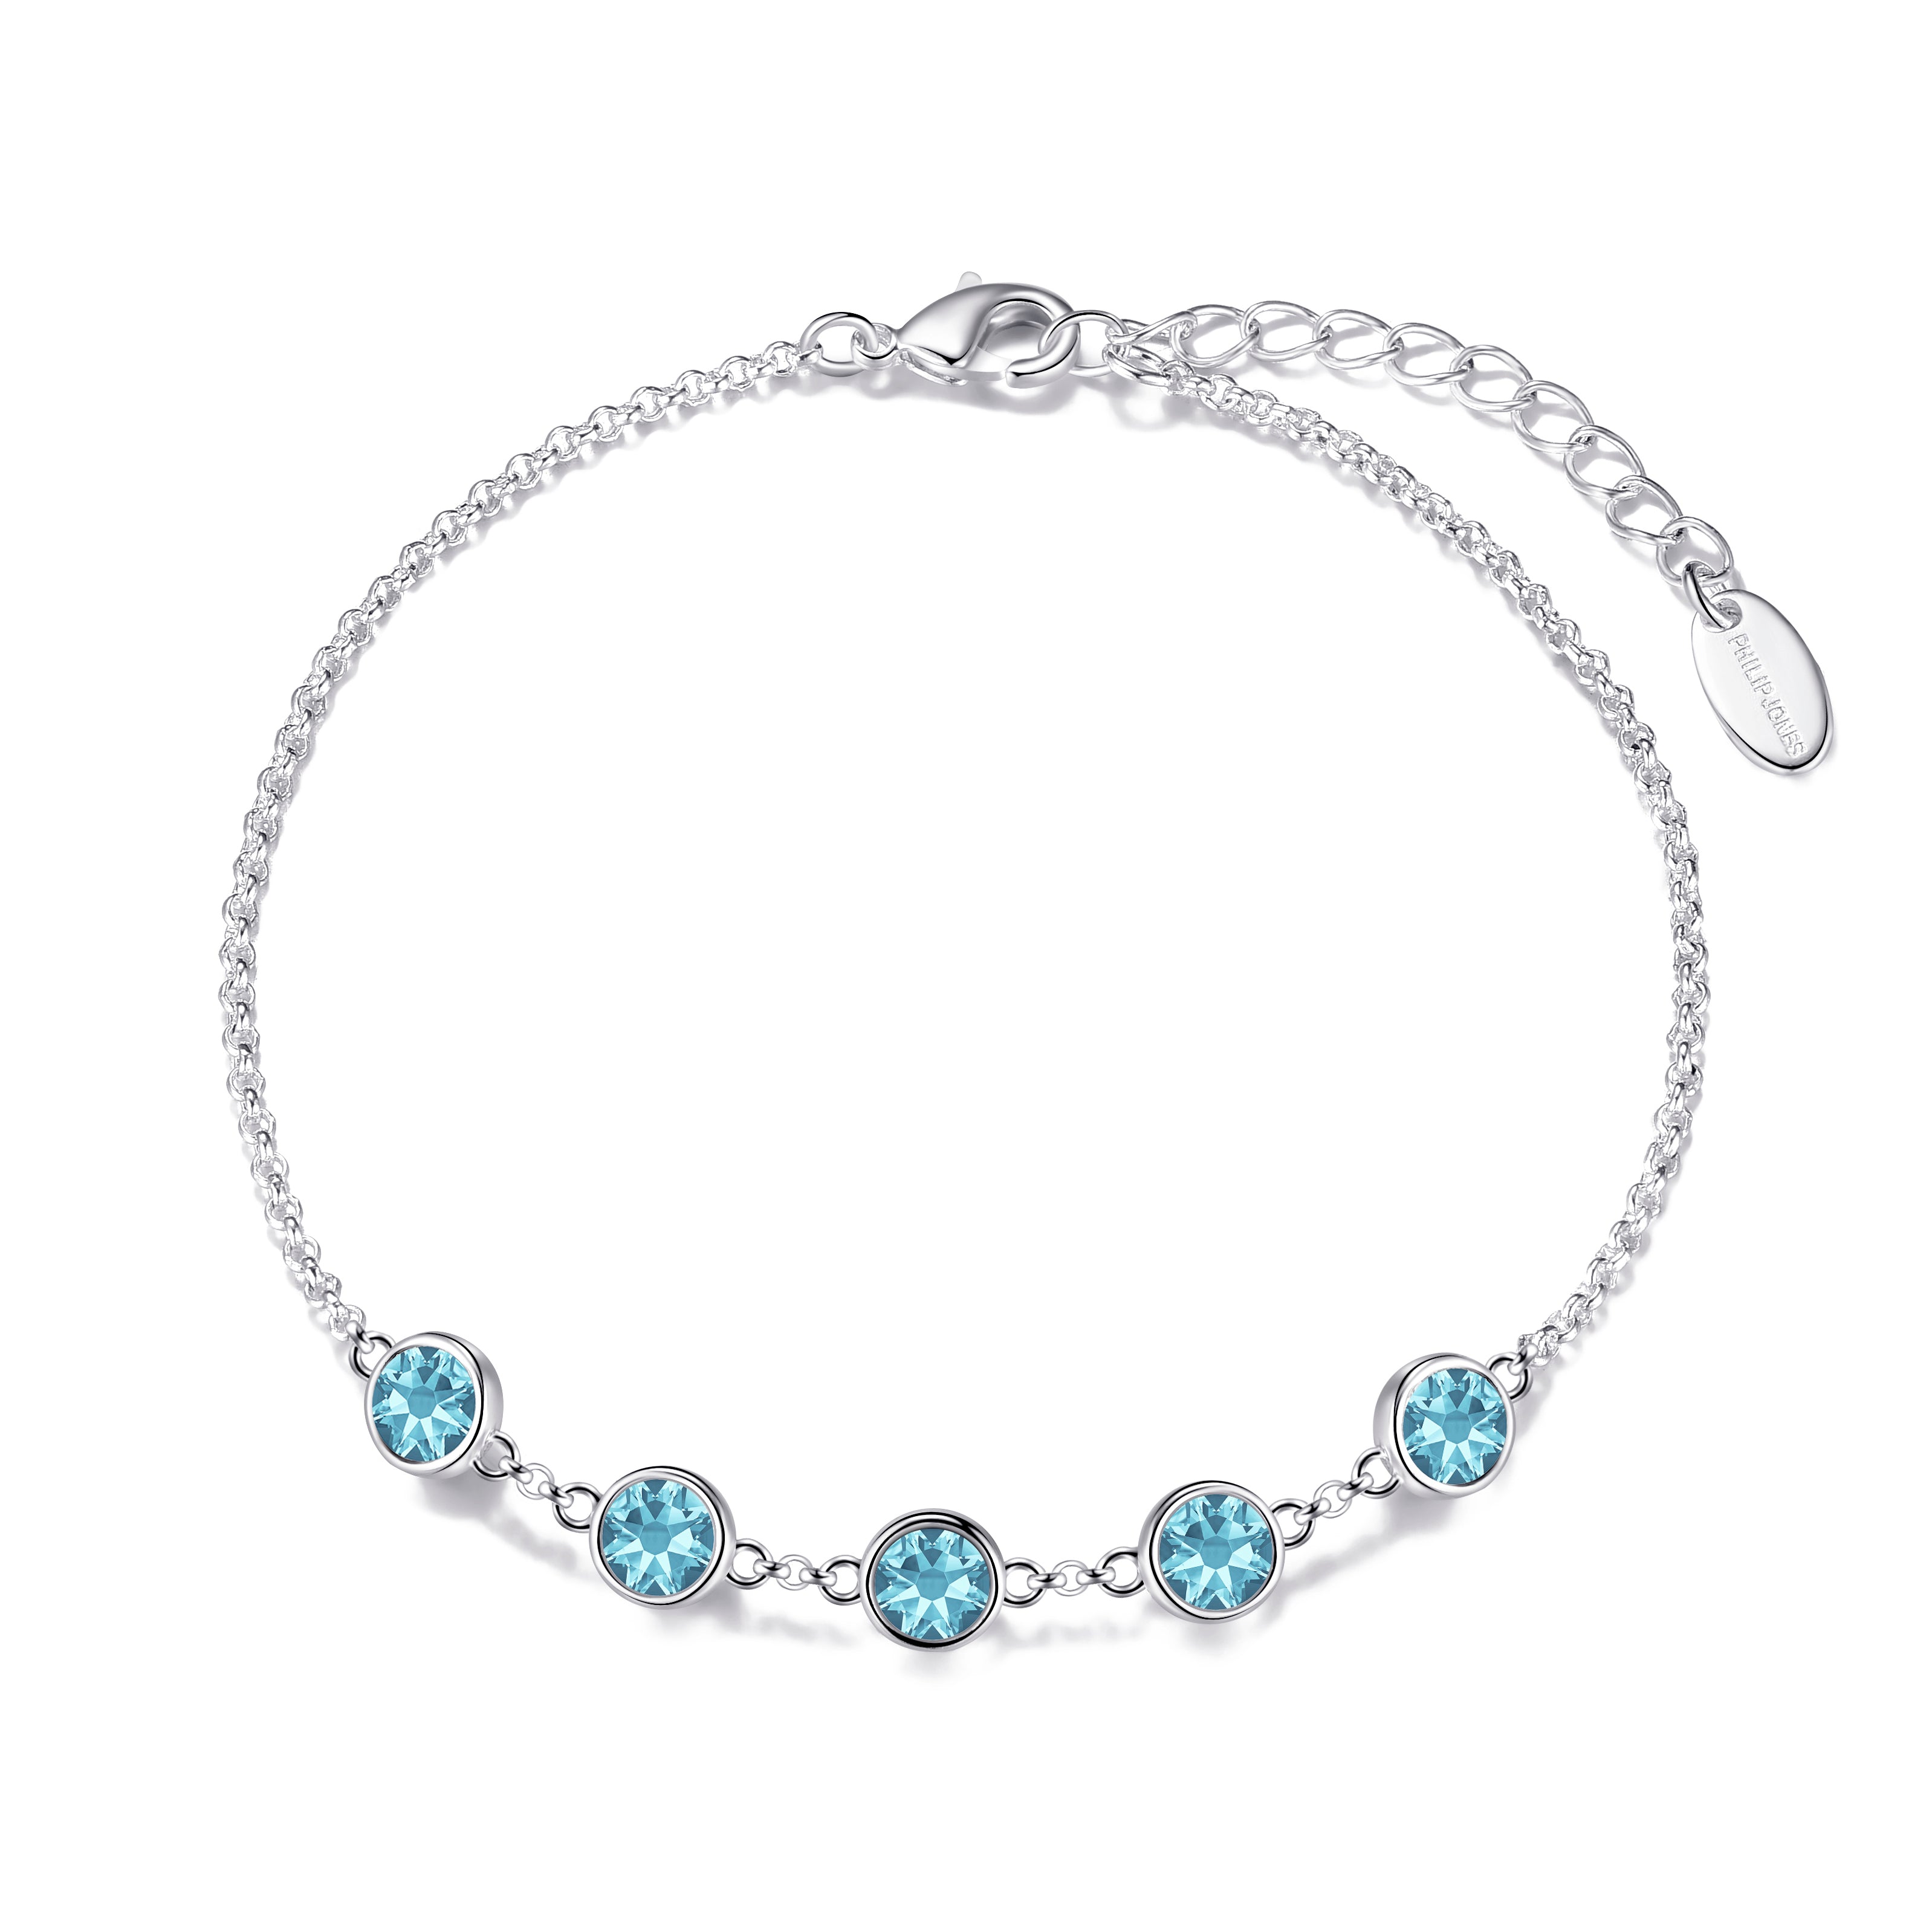 March Birthstone Bracelet Created with Aquamarine Zircondia® Crystals